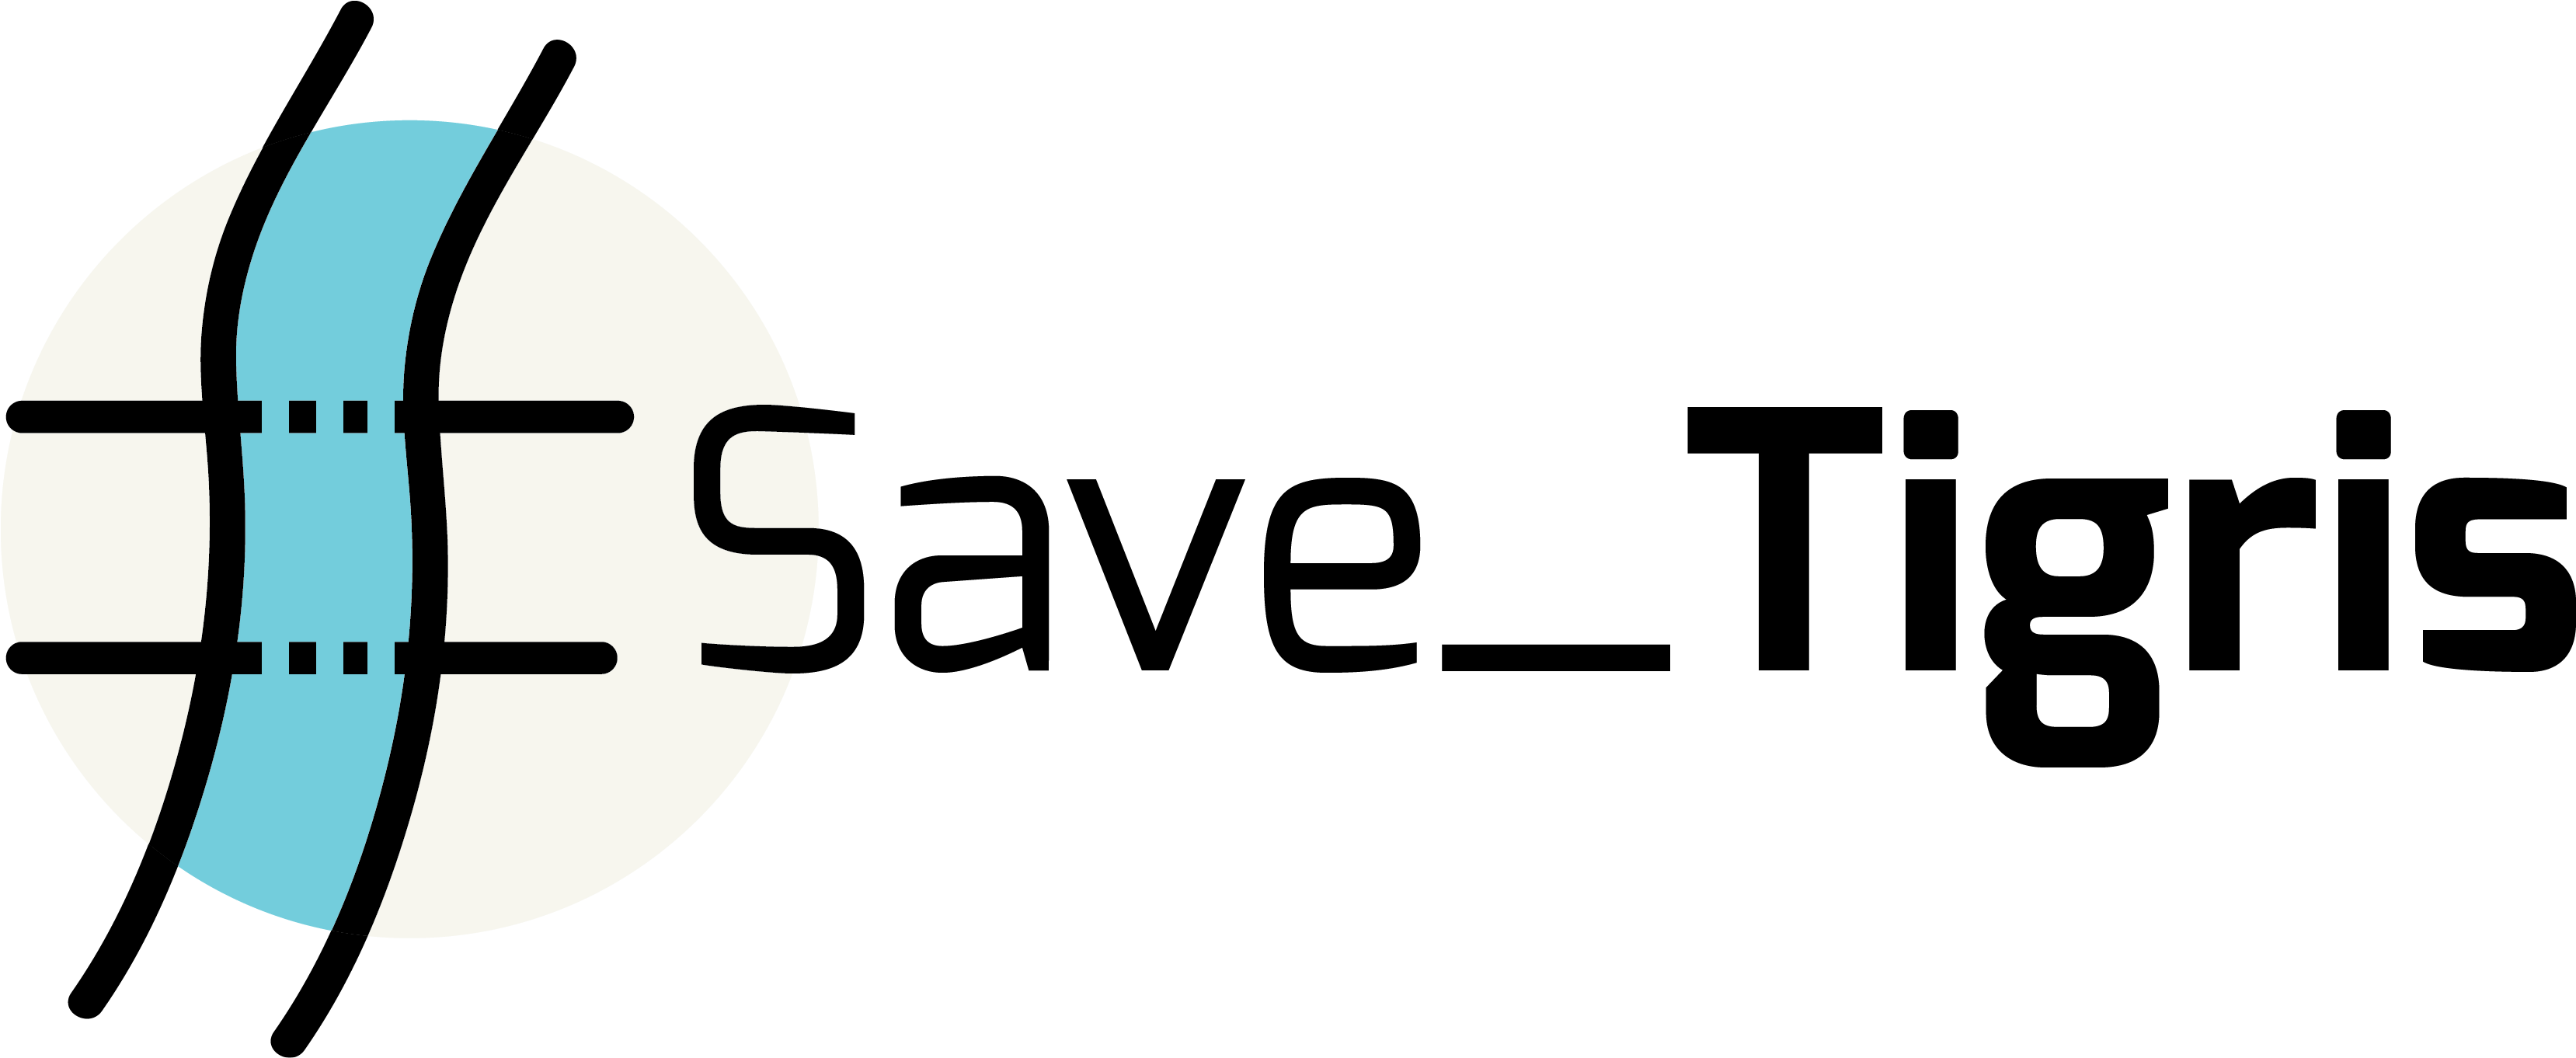 A White And Black Logo